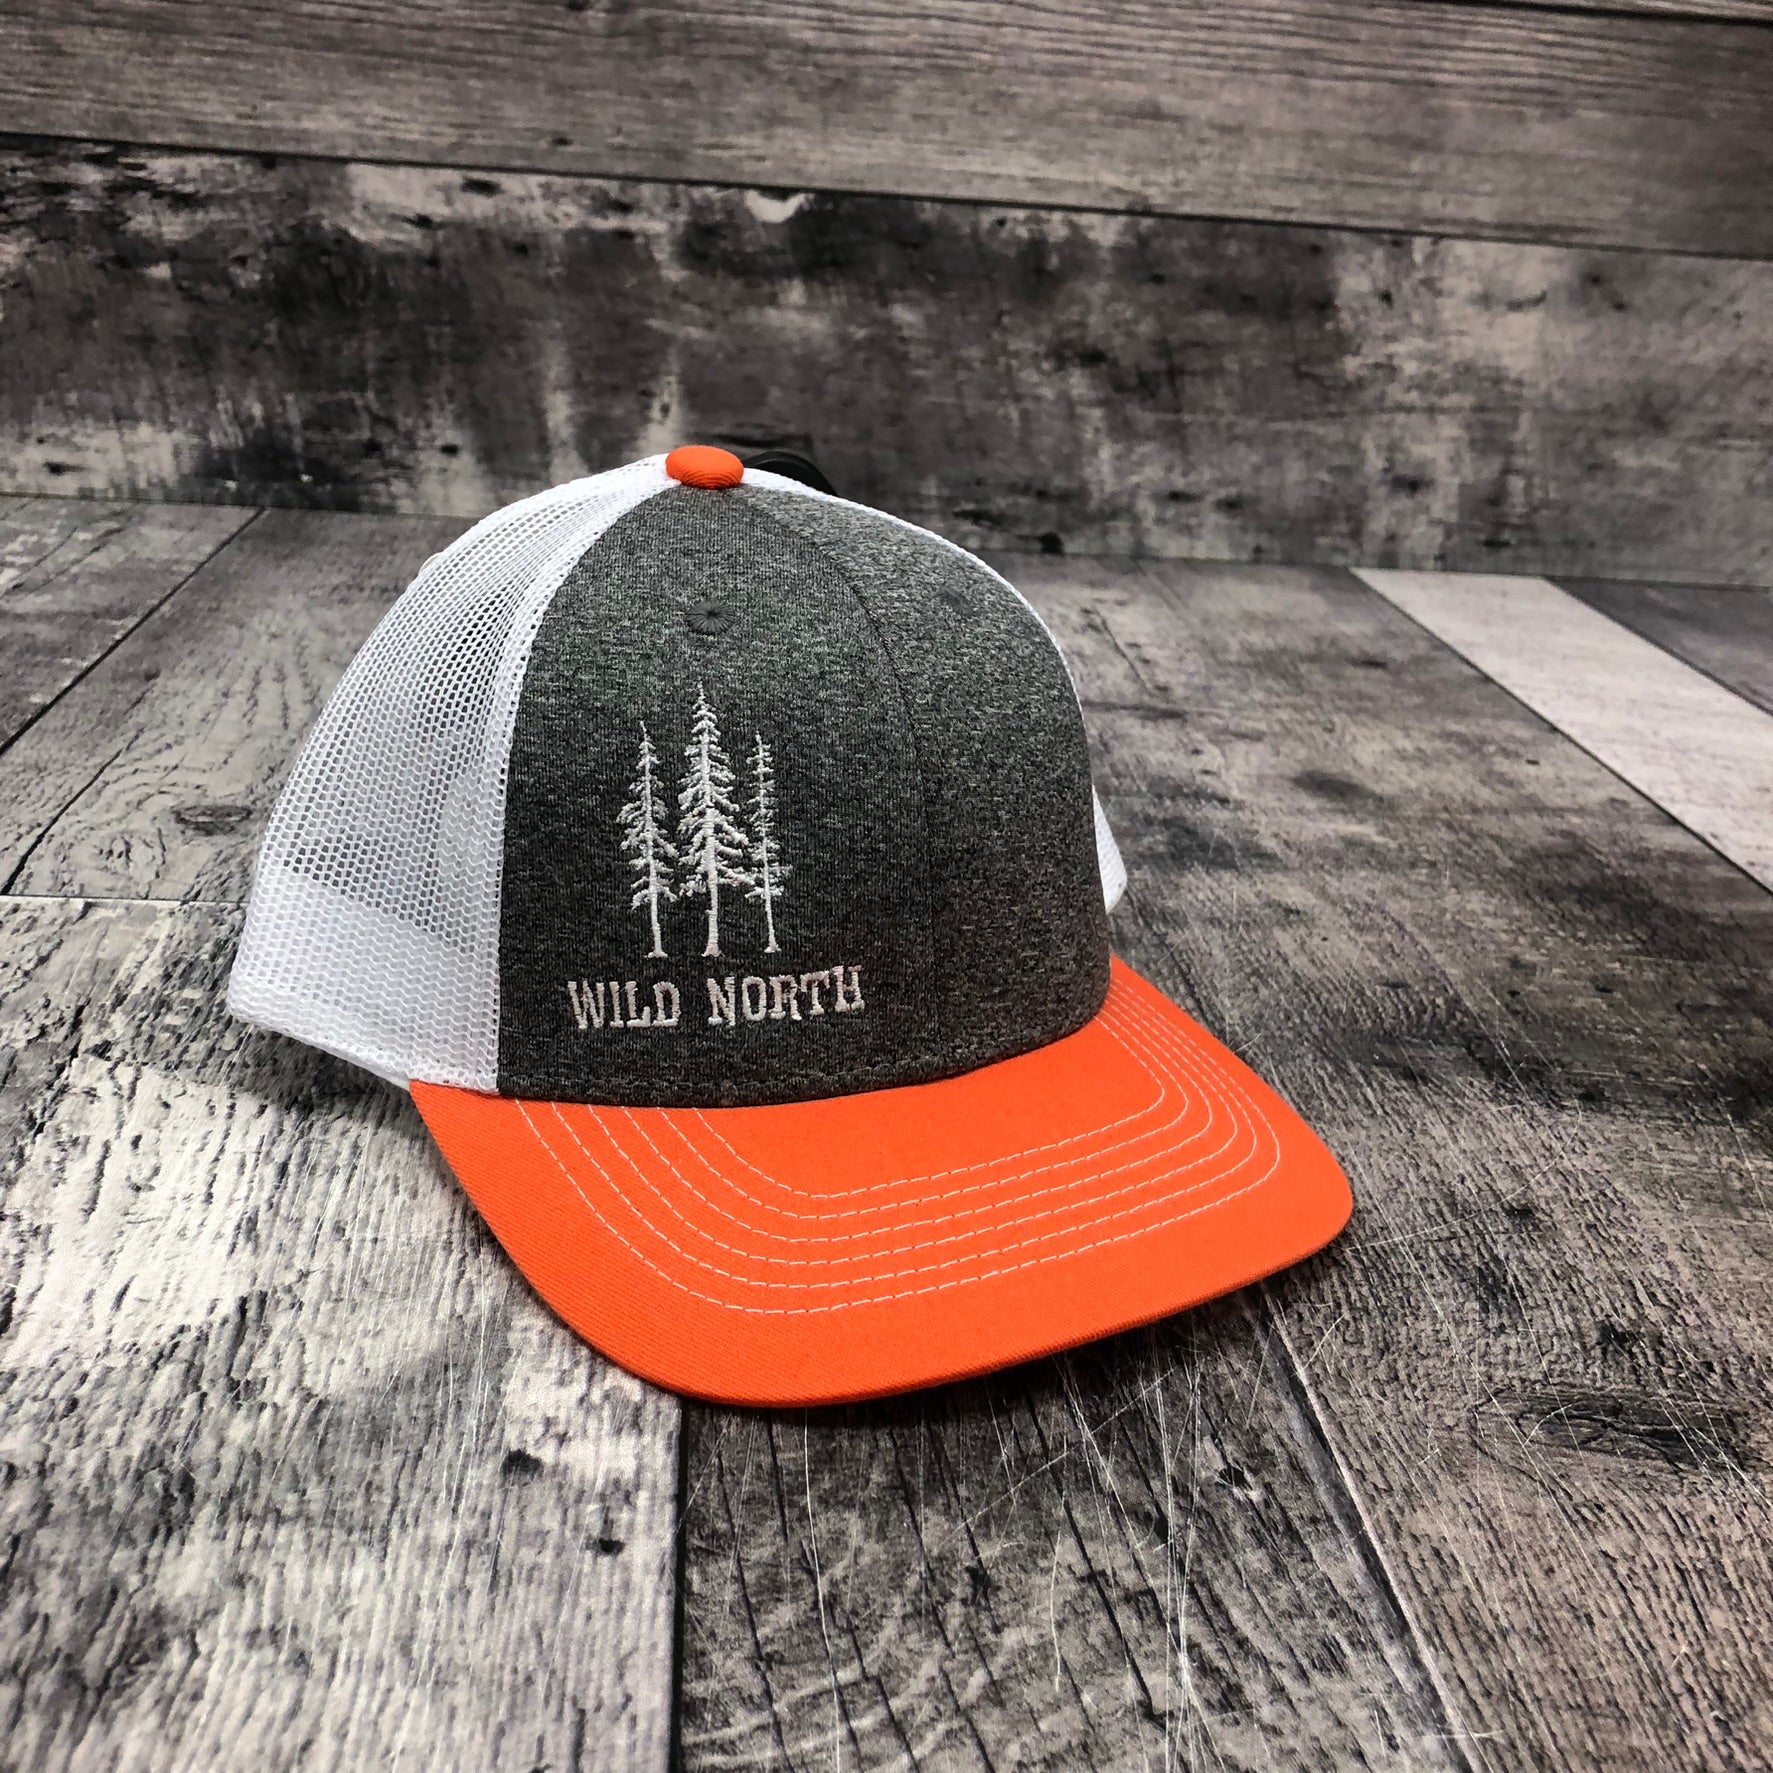 Wild North Mesh Snapback Youth Embroidered Hat - Grey (white/orange)